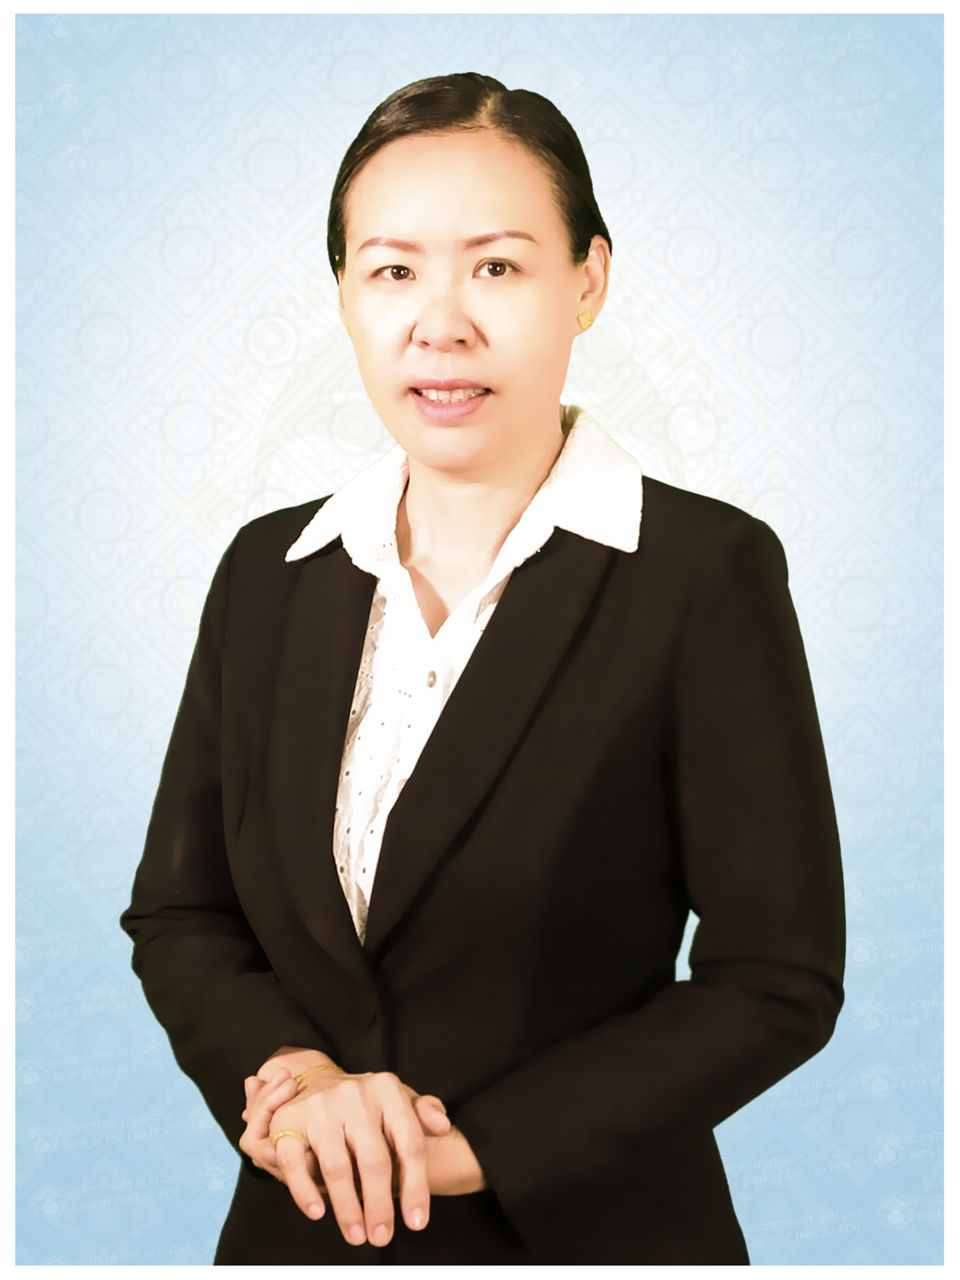 Mrs. Phengsy Phengmuong